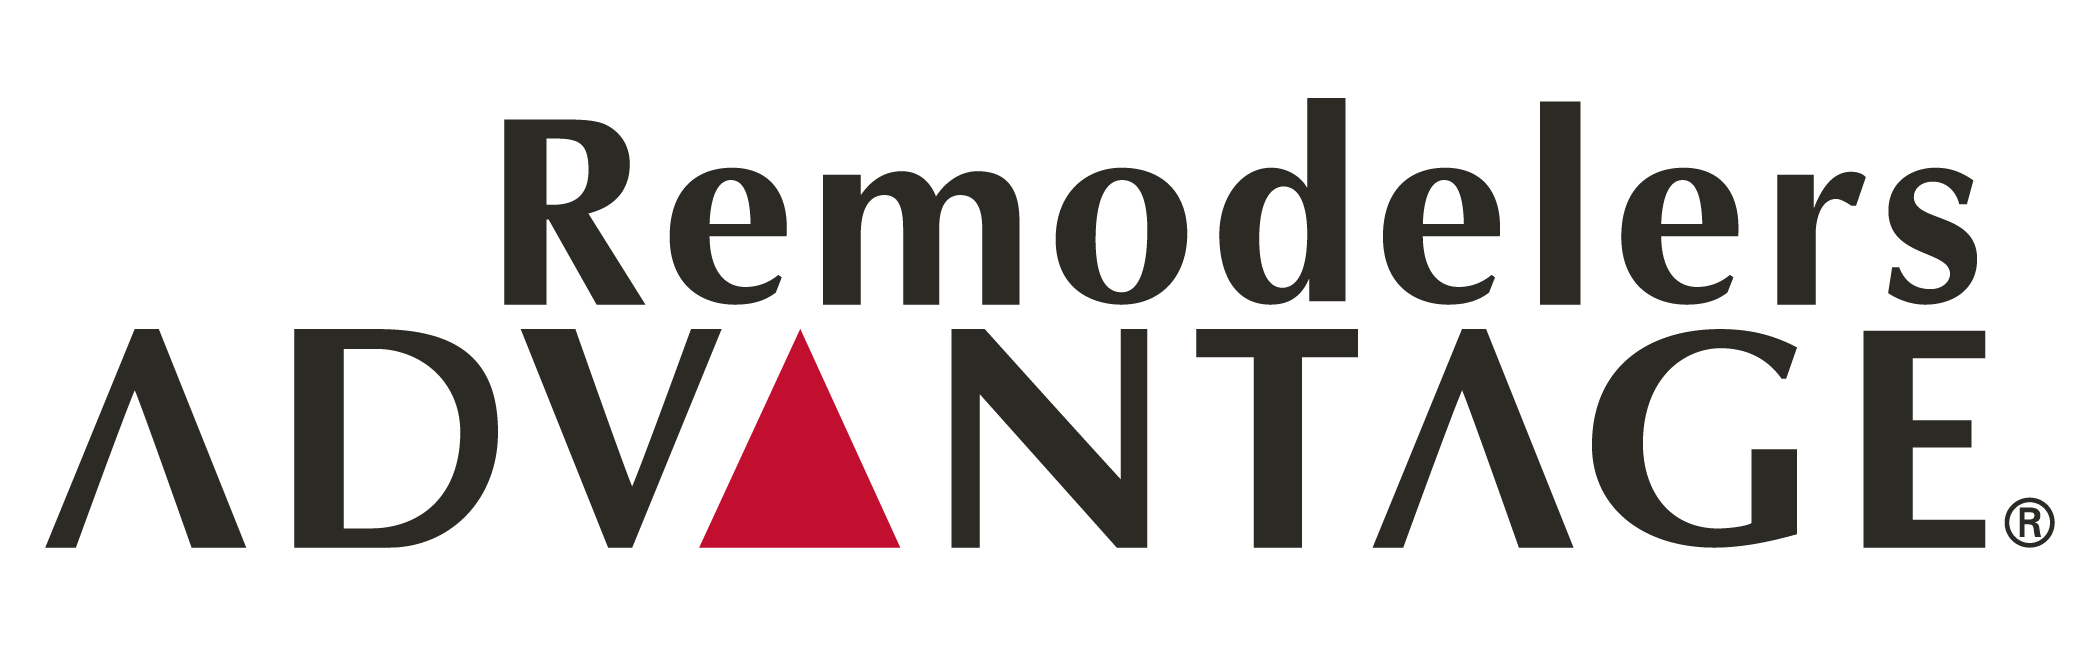 Remodelers Advantage logo